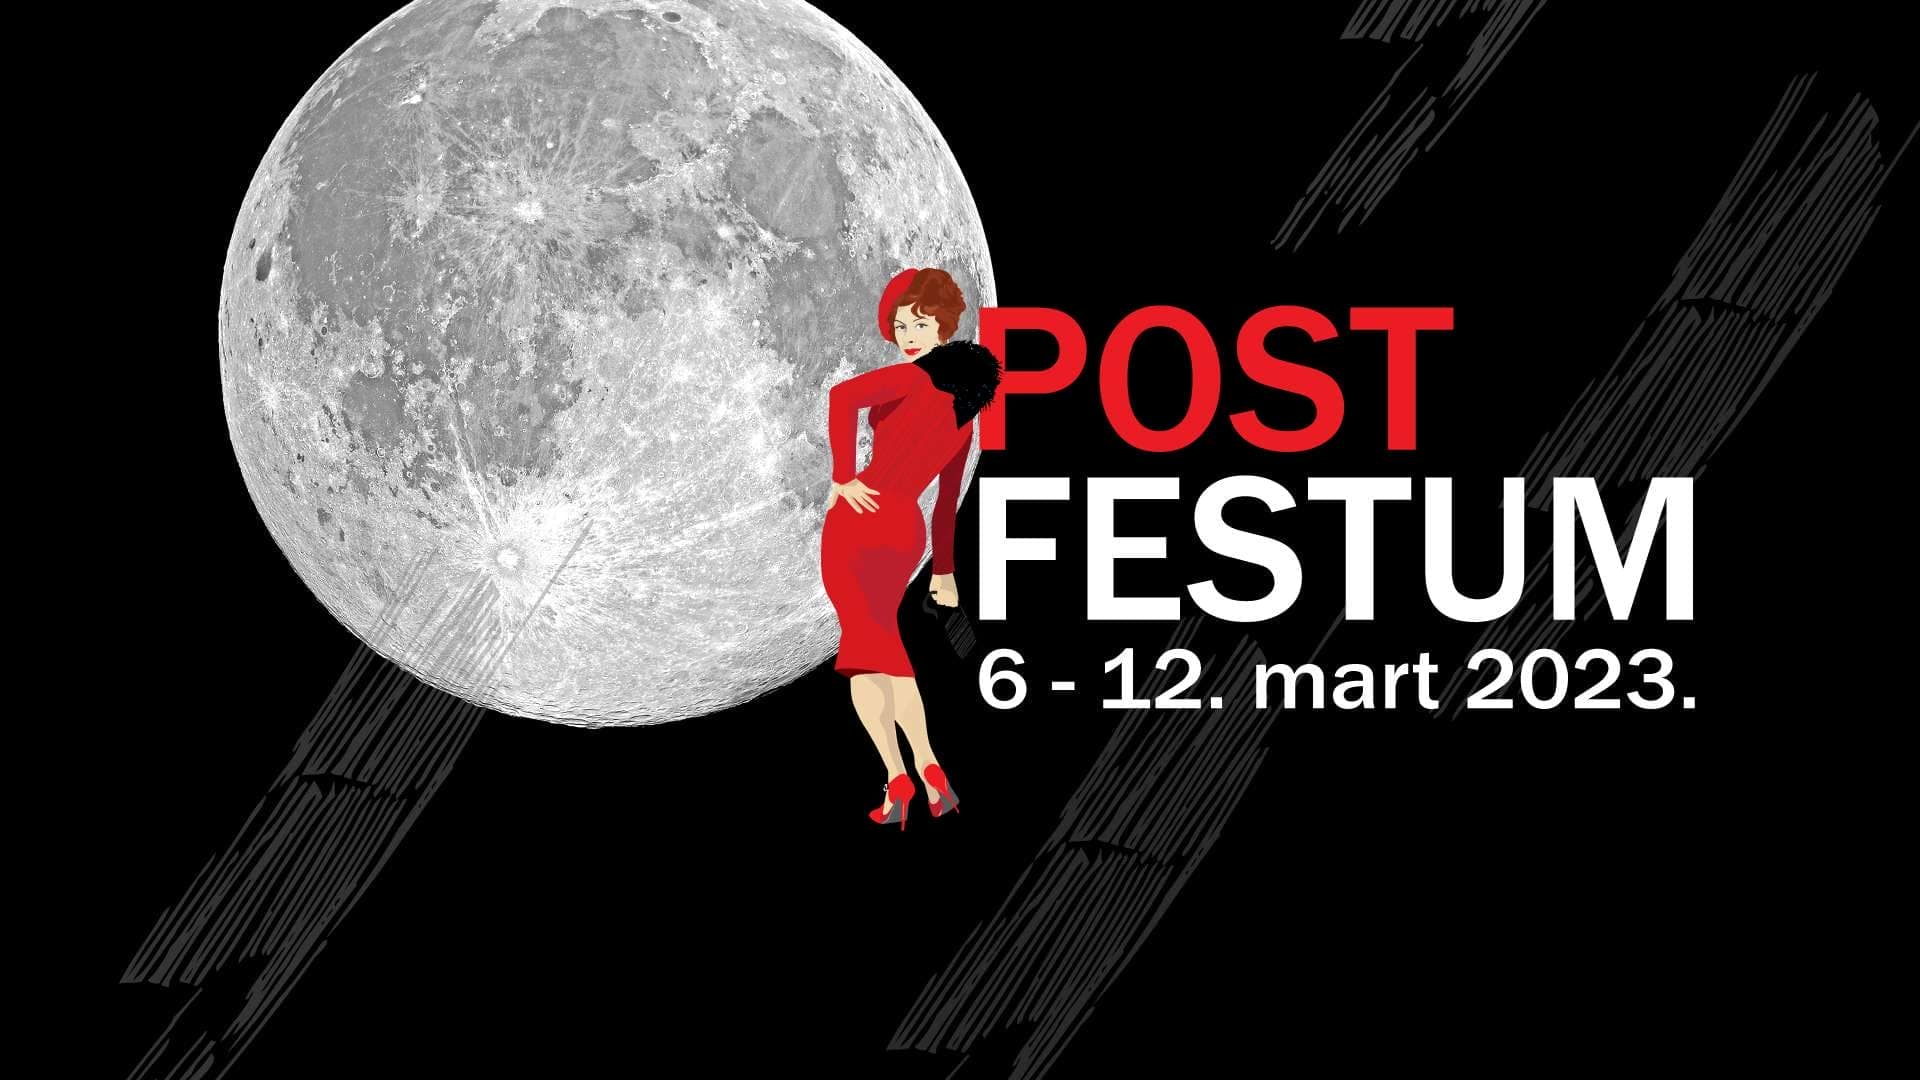 postfestum baner sajt